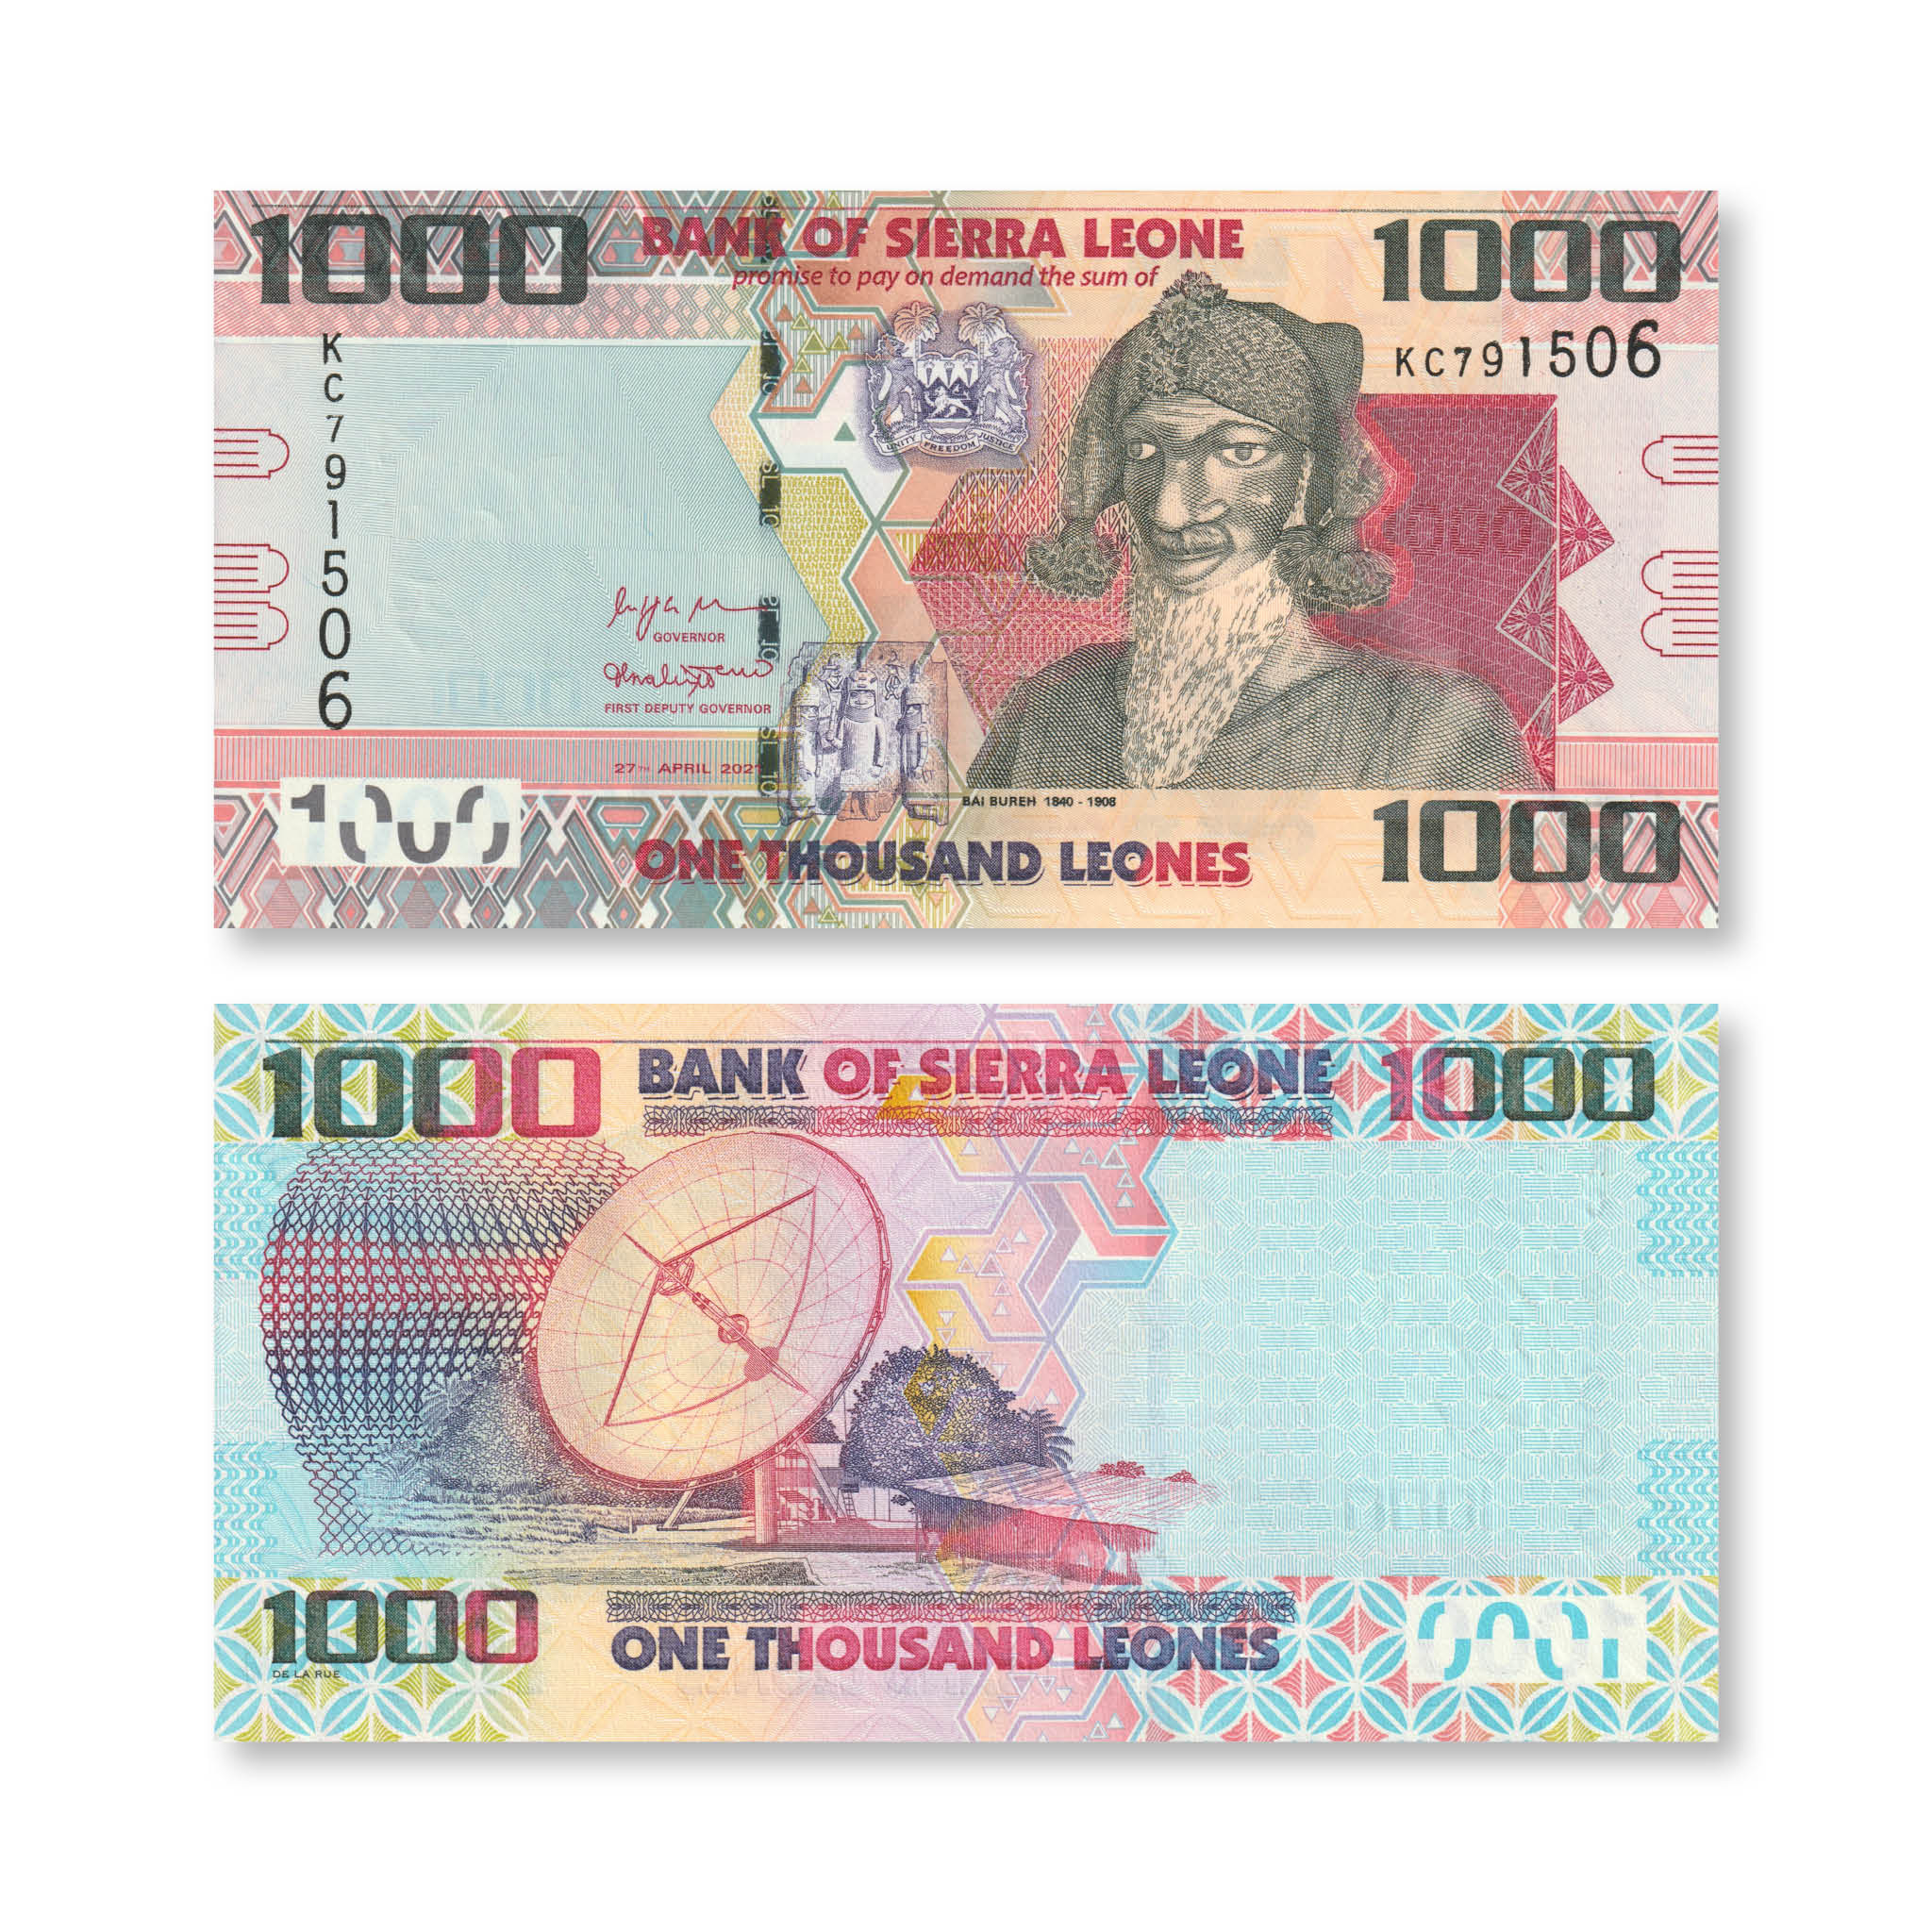 Sierra Leone 1000 Leones, 2021, B125f, P30, UNC - Robert's World Money - World Banknotes